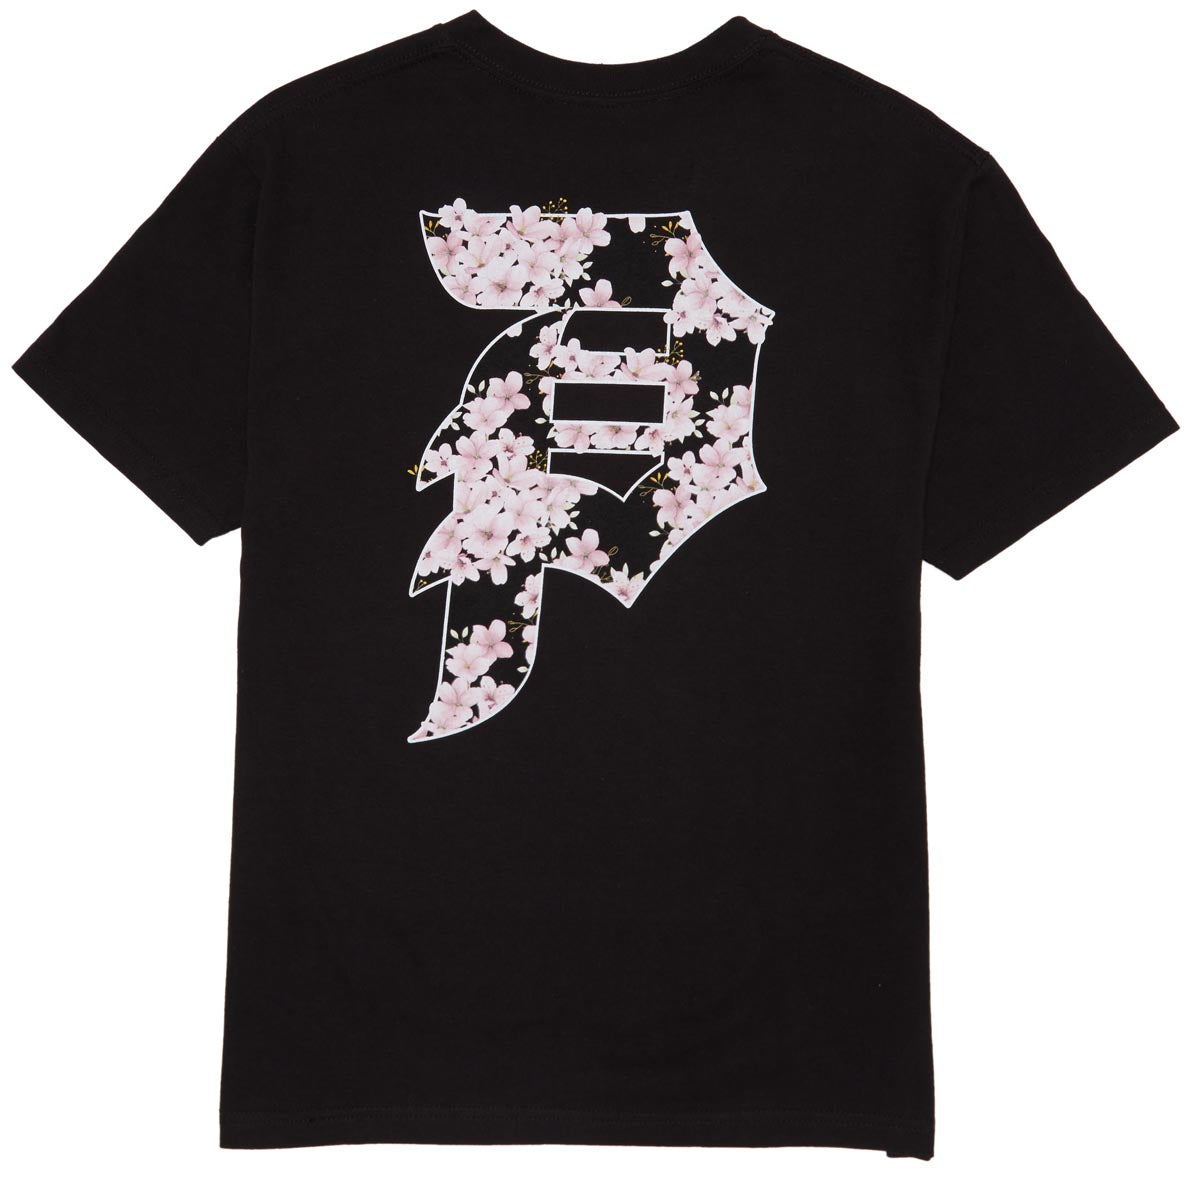 Primitive Sakura T-Shirt - Black image 1